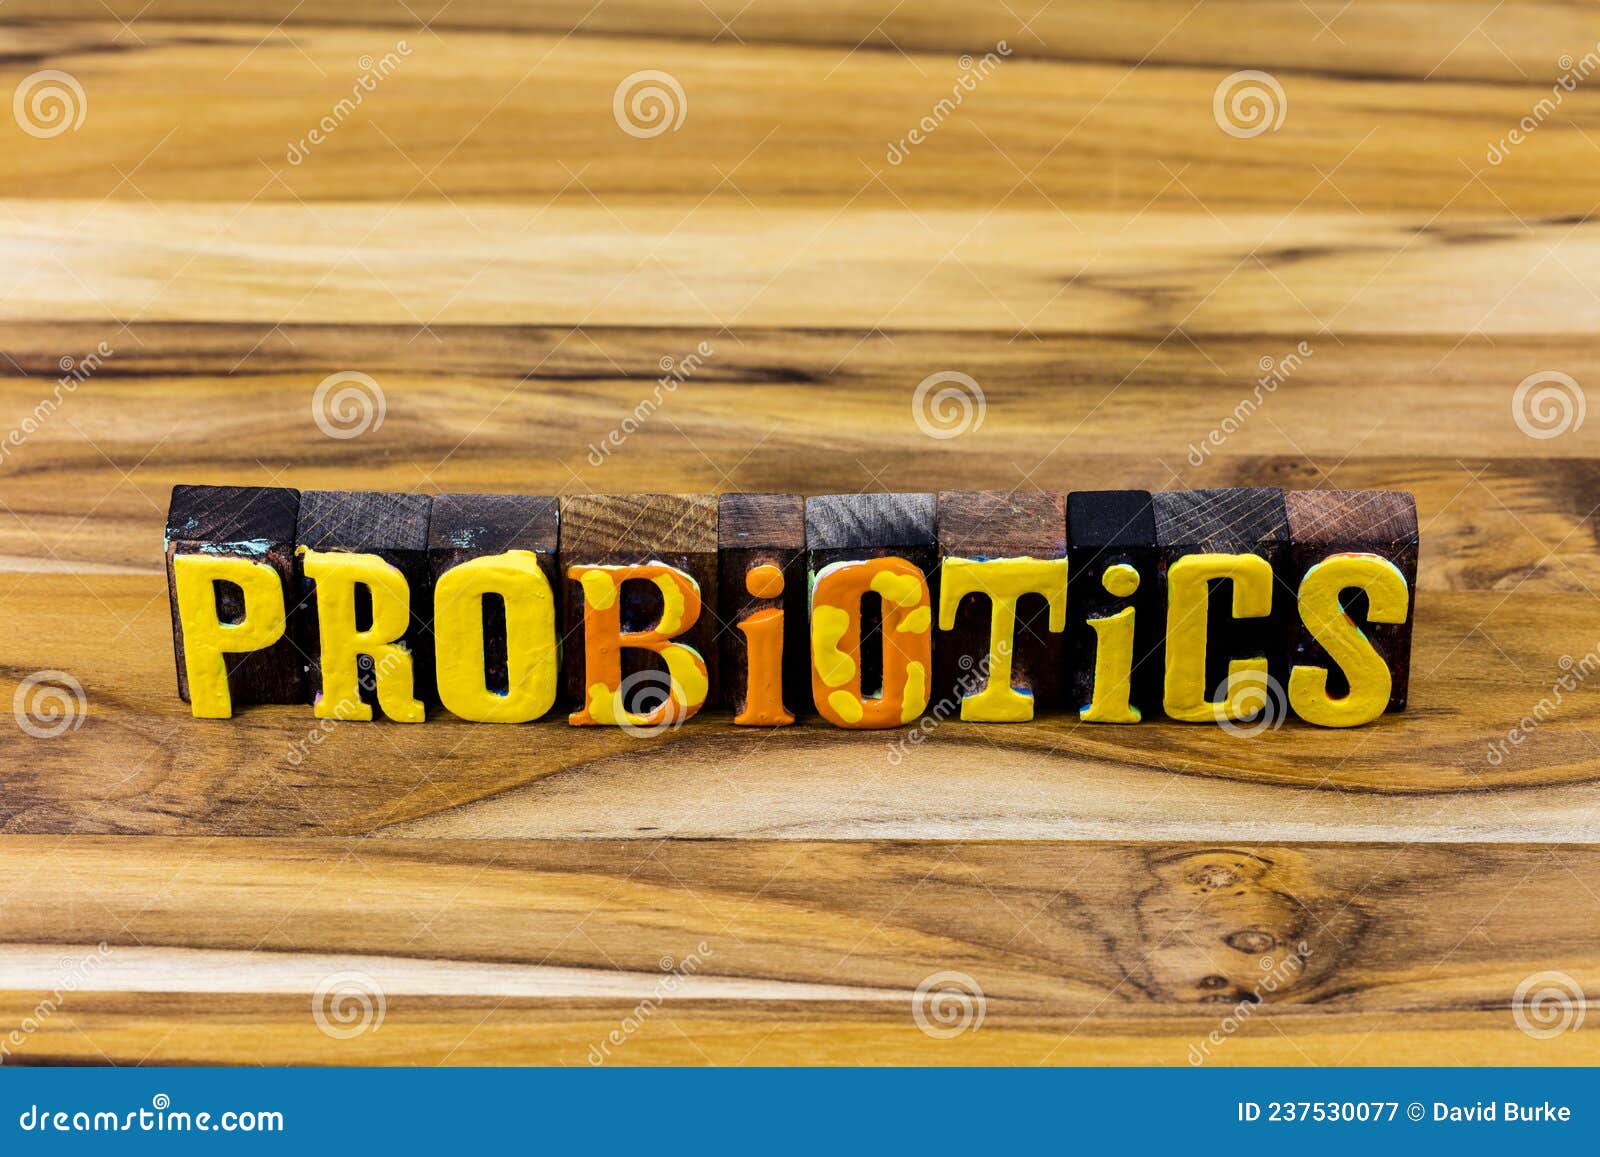 probiotics beneficial probiotic supplement digestion bacterium bacteria